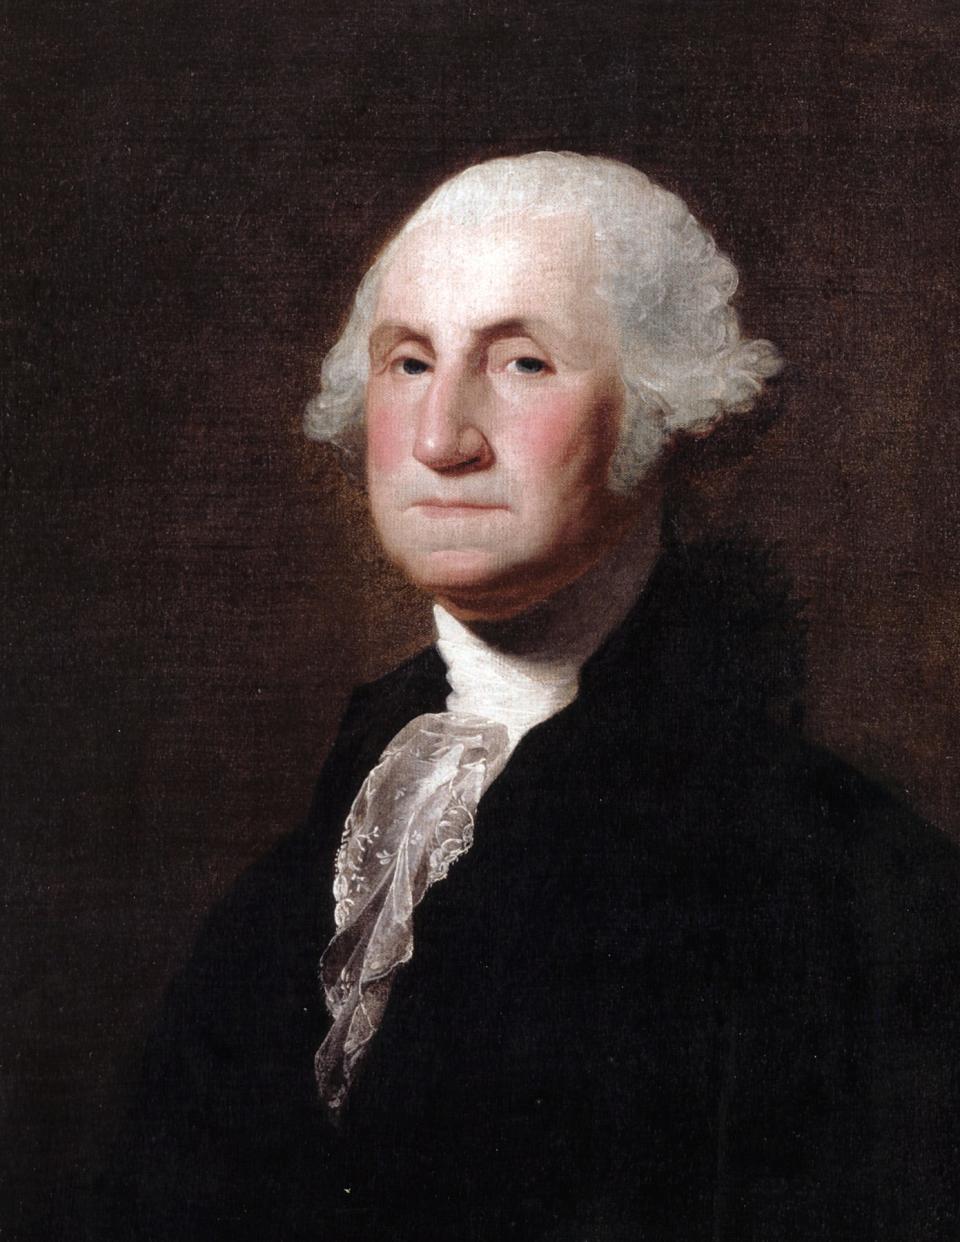 Portrait of George Washington by Gilbert Stuart.